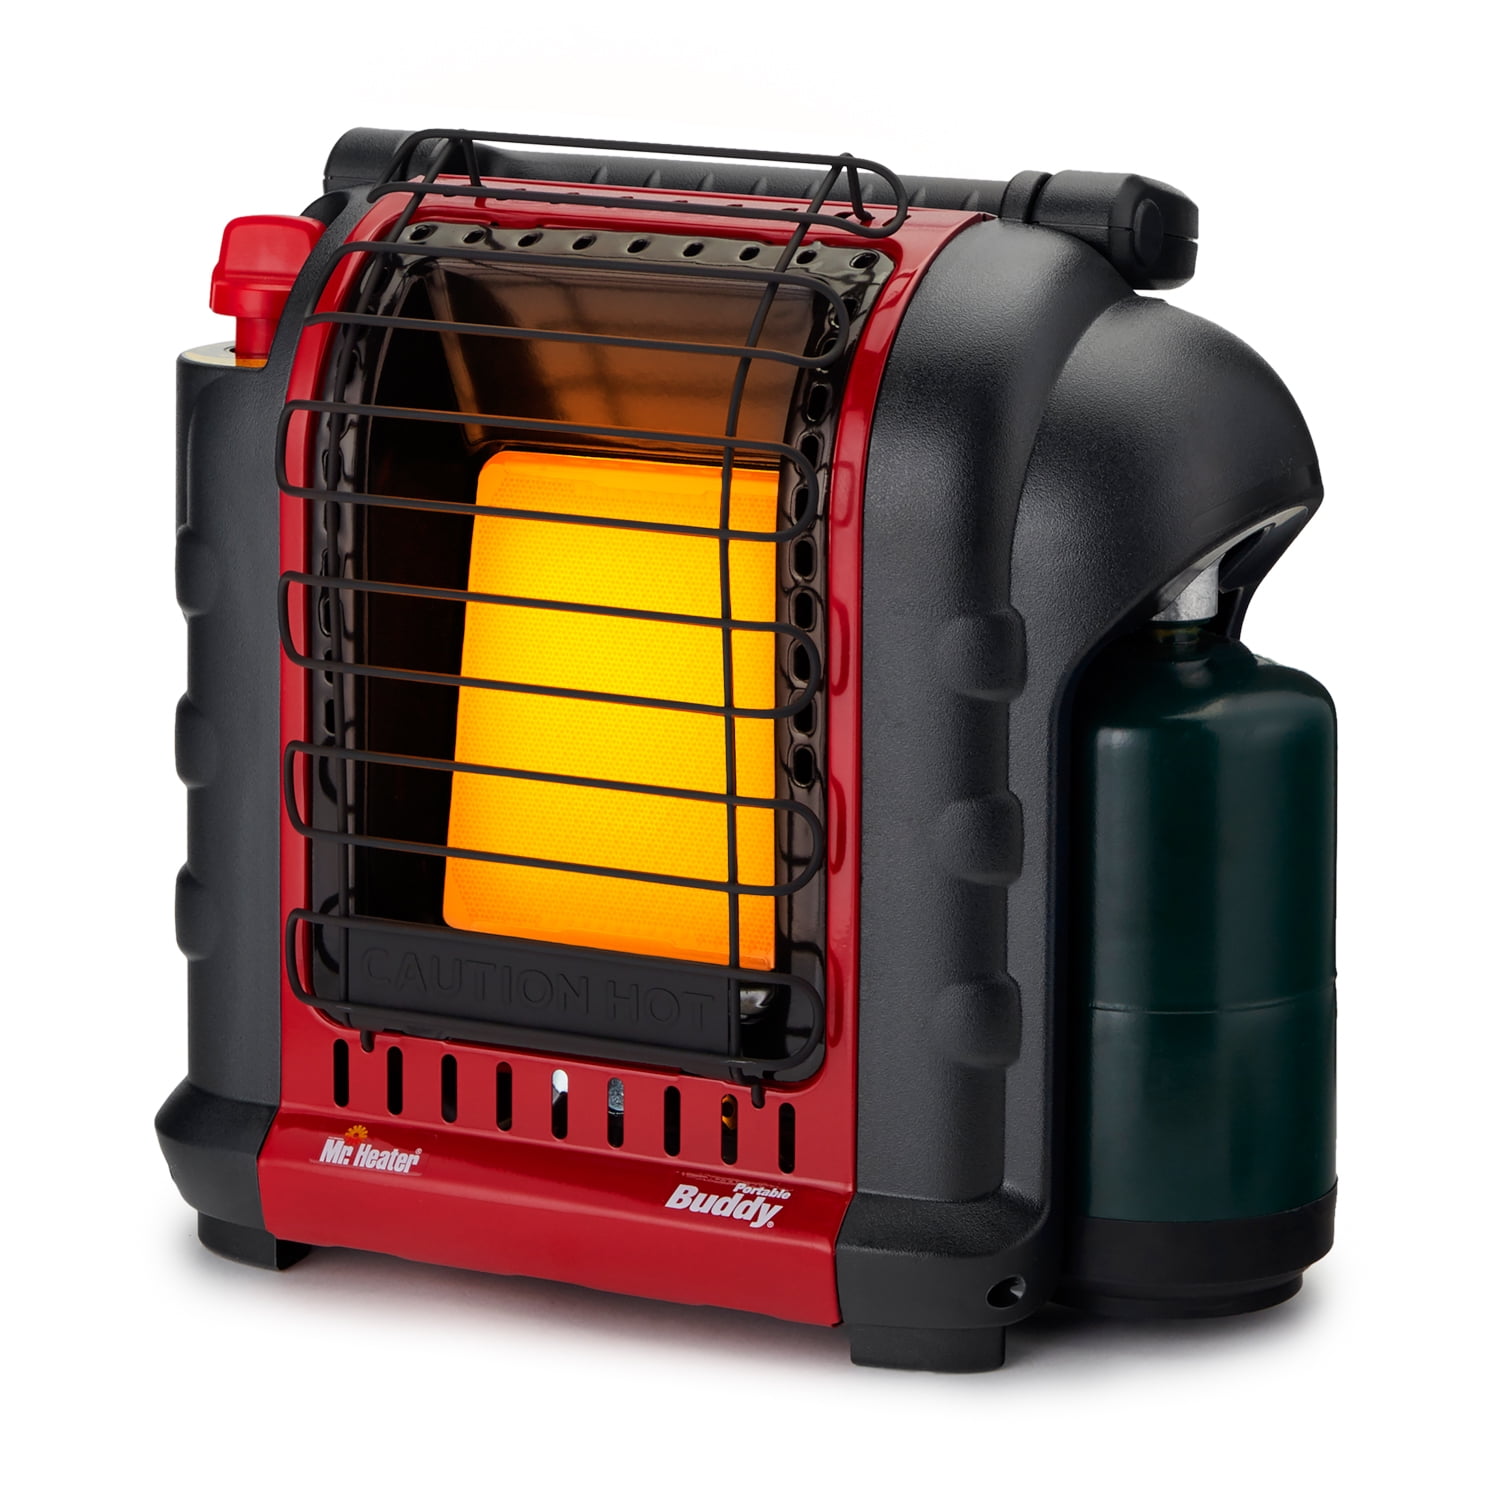 9K BTU Portable Buddy Heater RED Portable Heat NEW!! Mr Heater Mr heater 4K 